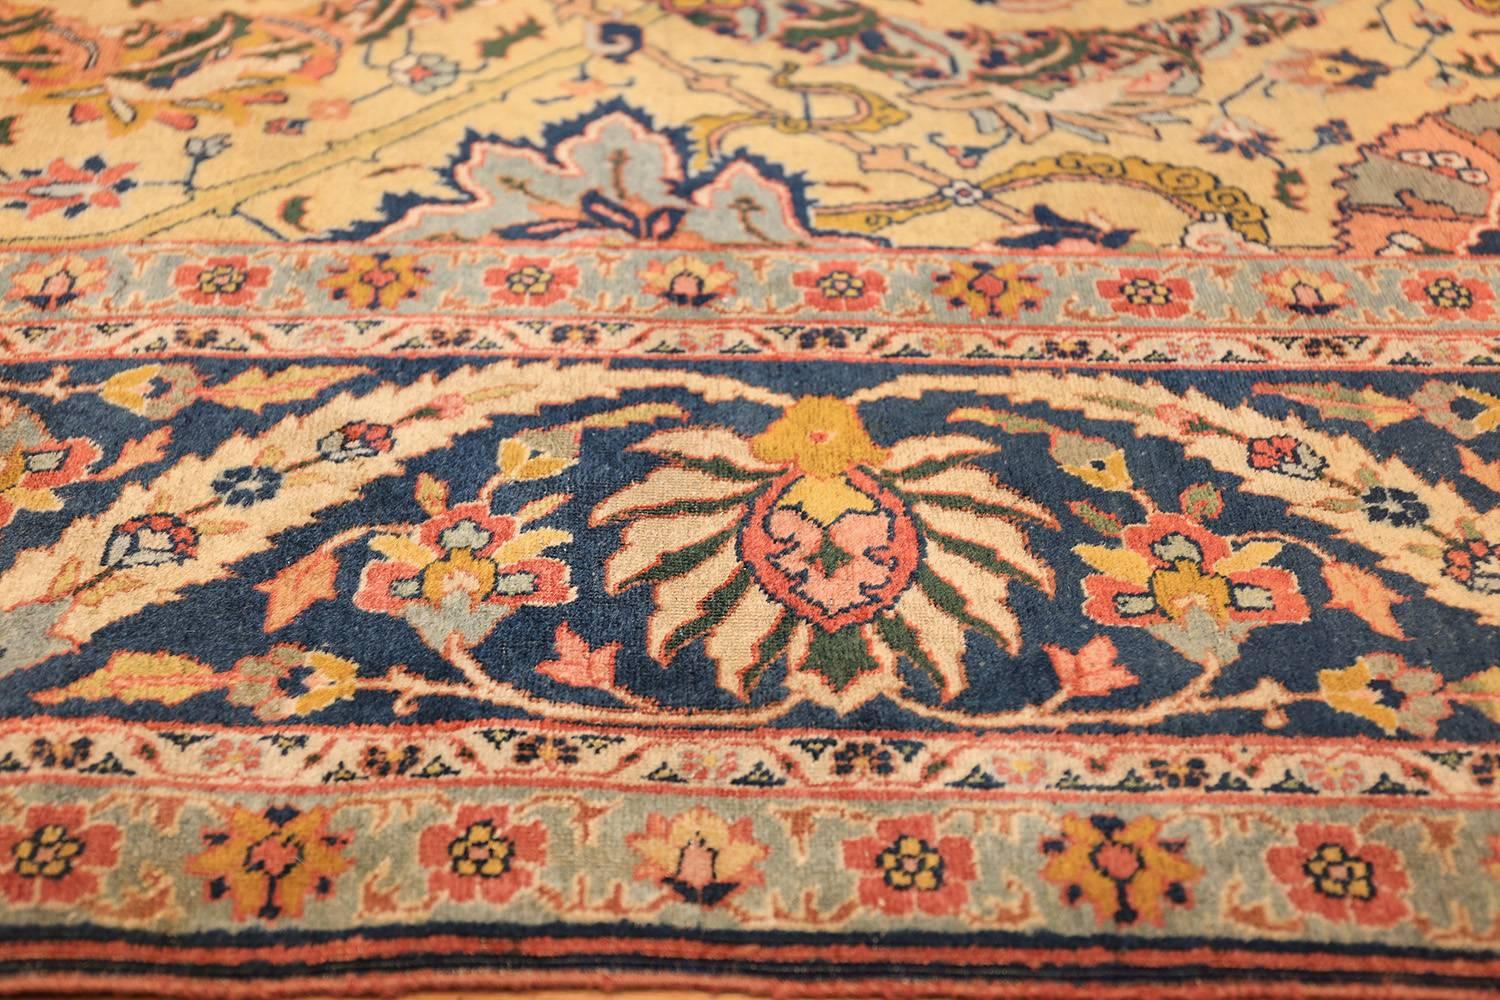 Wool Antique Persian Sickle Leaf Tabriz Rug. Size: 9 ft x 12 ft (2.74 m x 3.66 m)